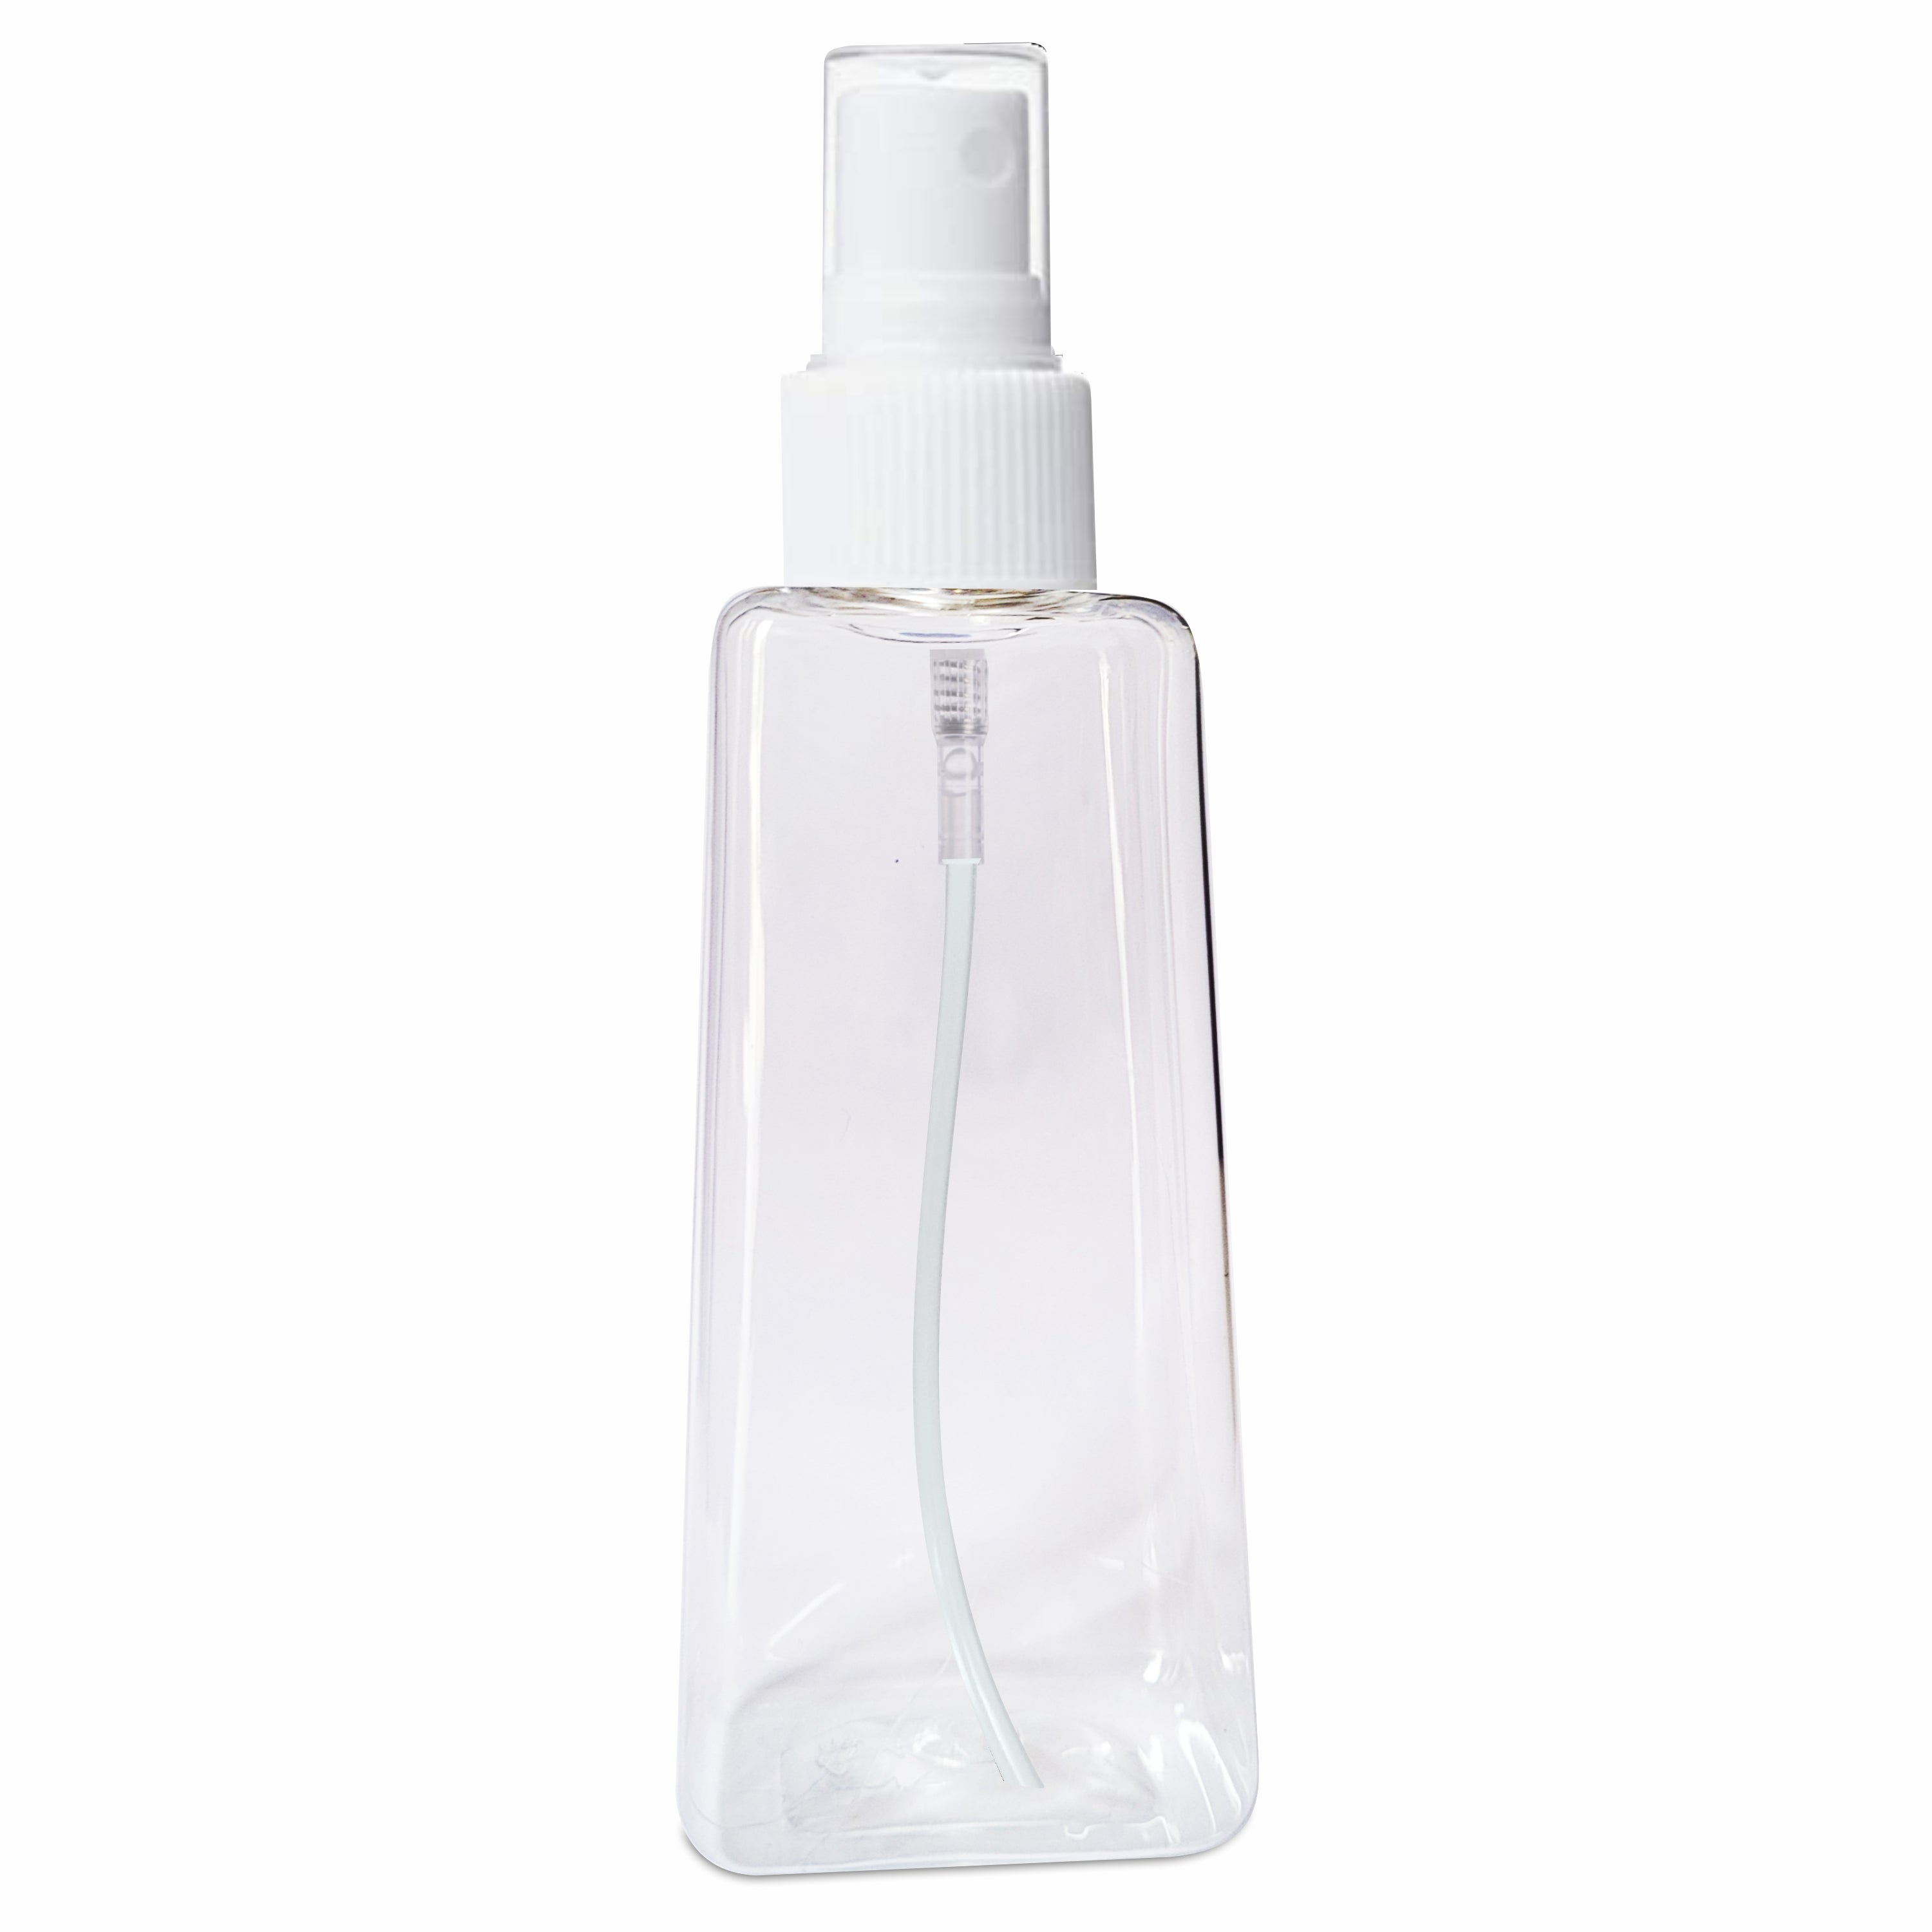 Pyramid Shape Clear Transparent Pet Bottle With White Mist Pump Spray 100ml [ZMT91]